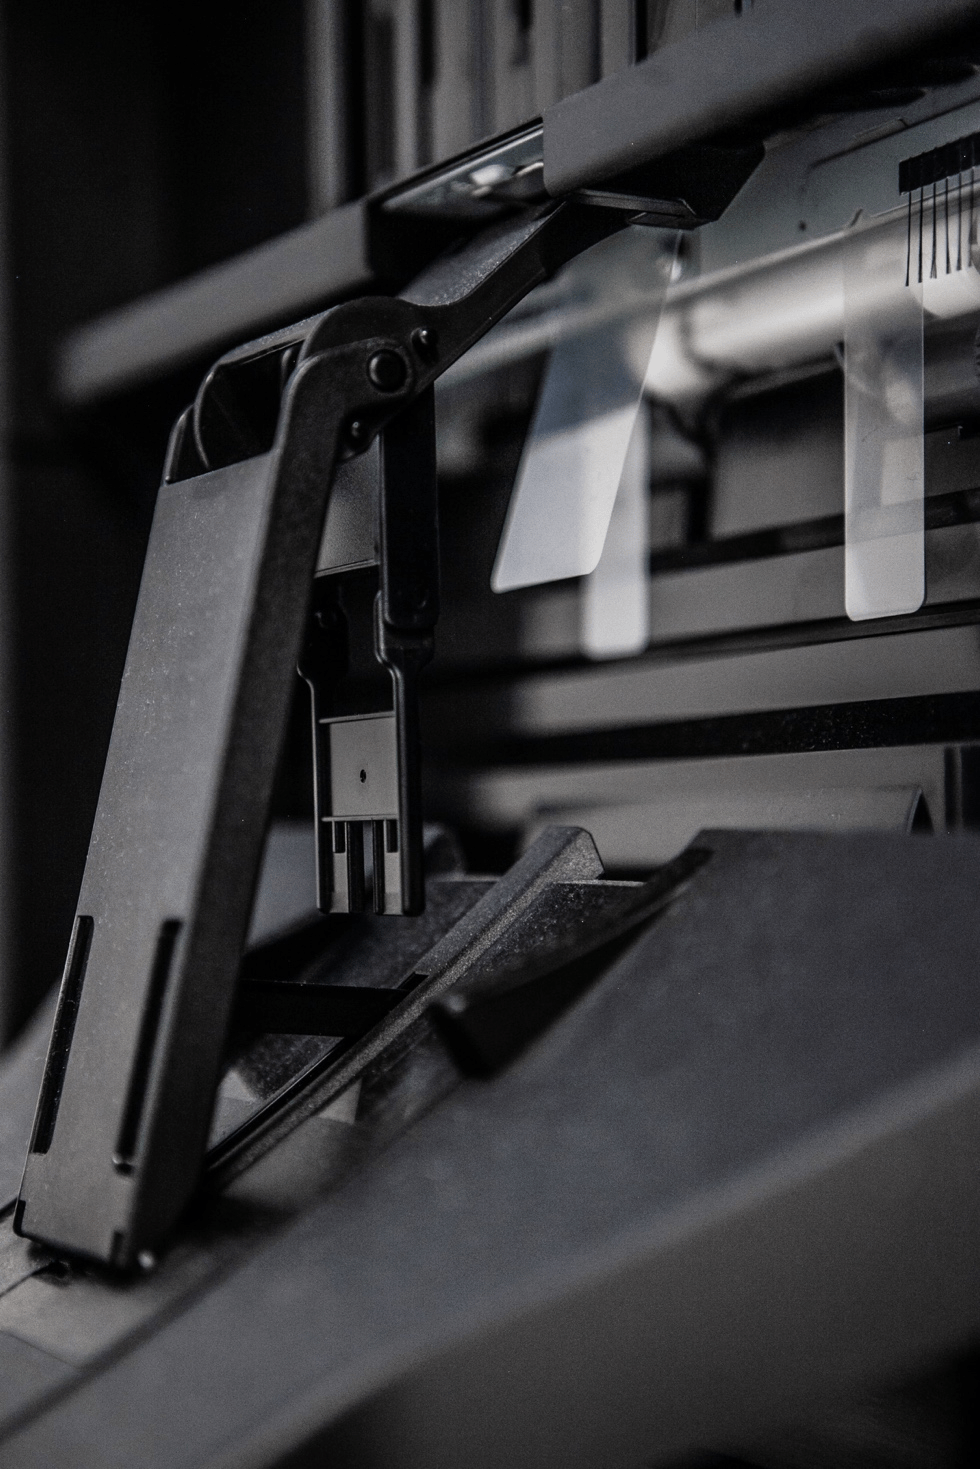 Close-up shot of a printer